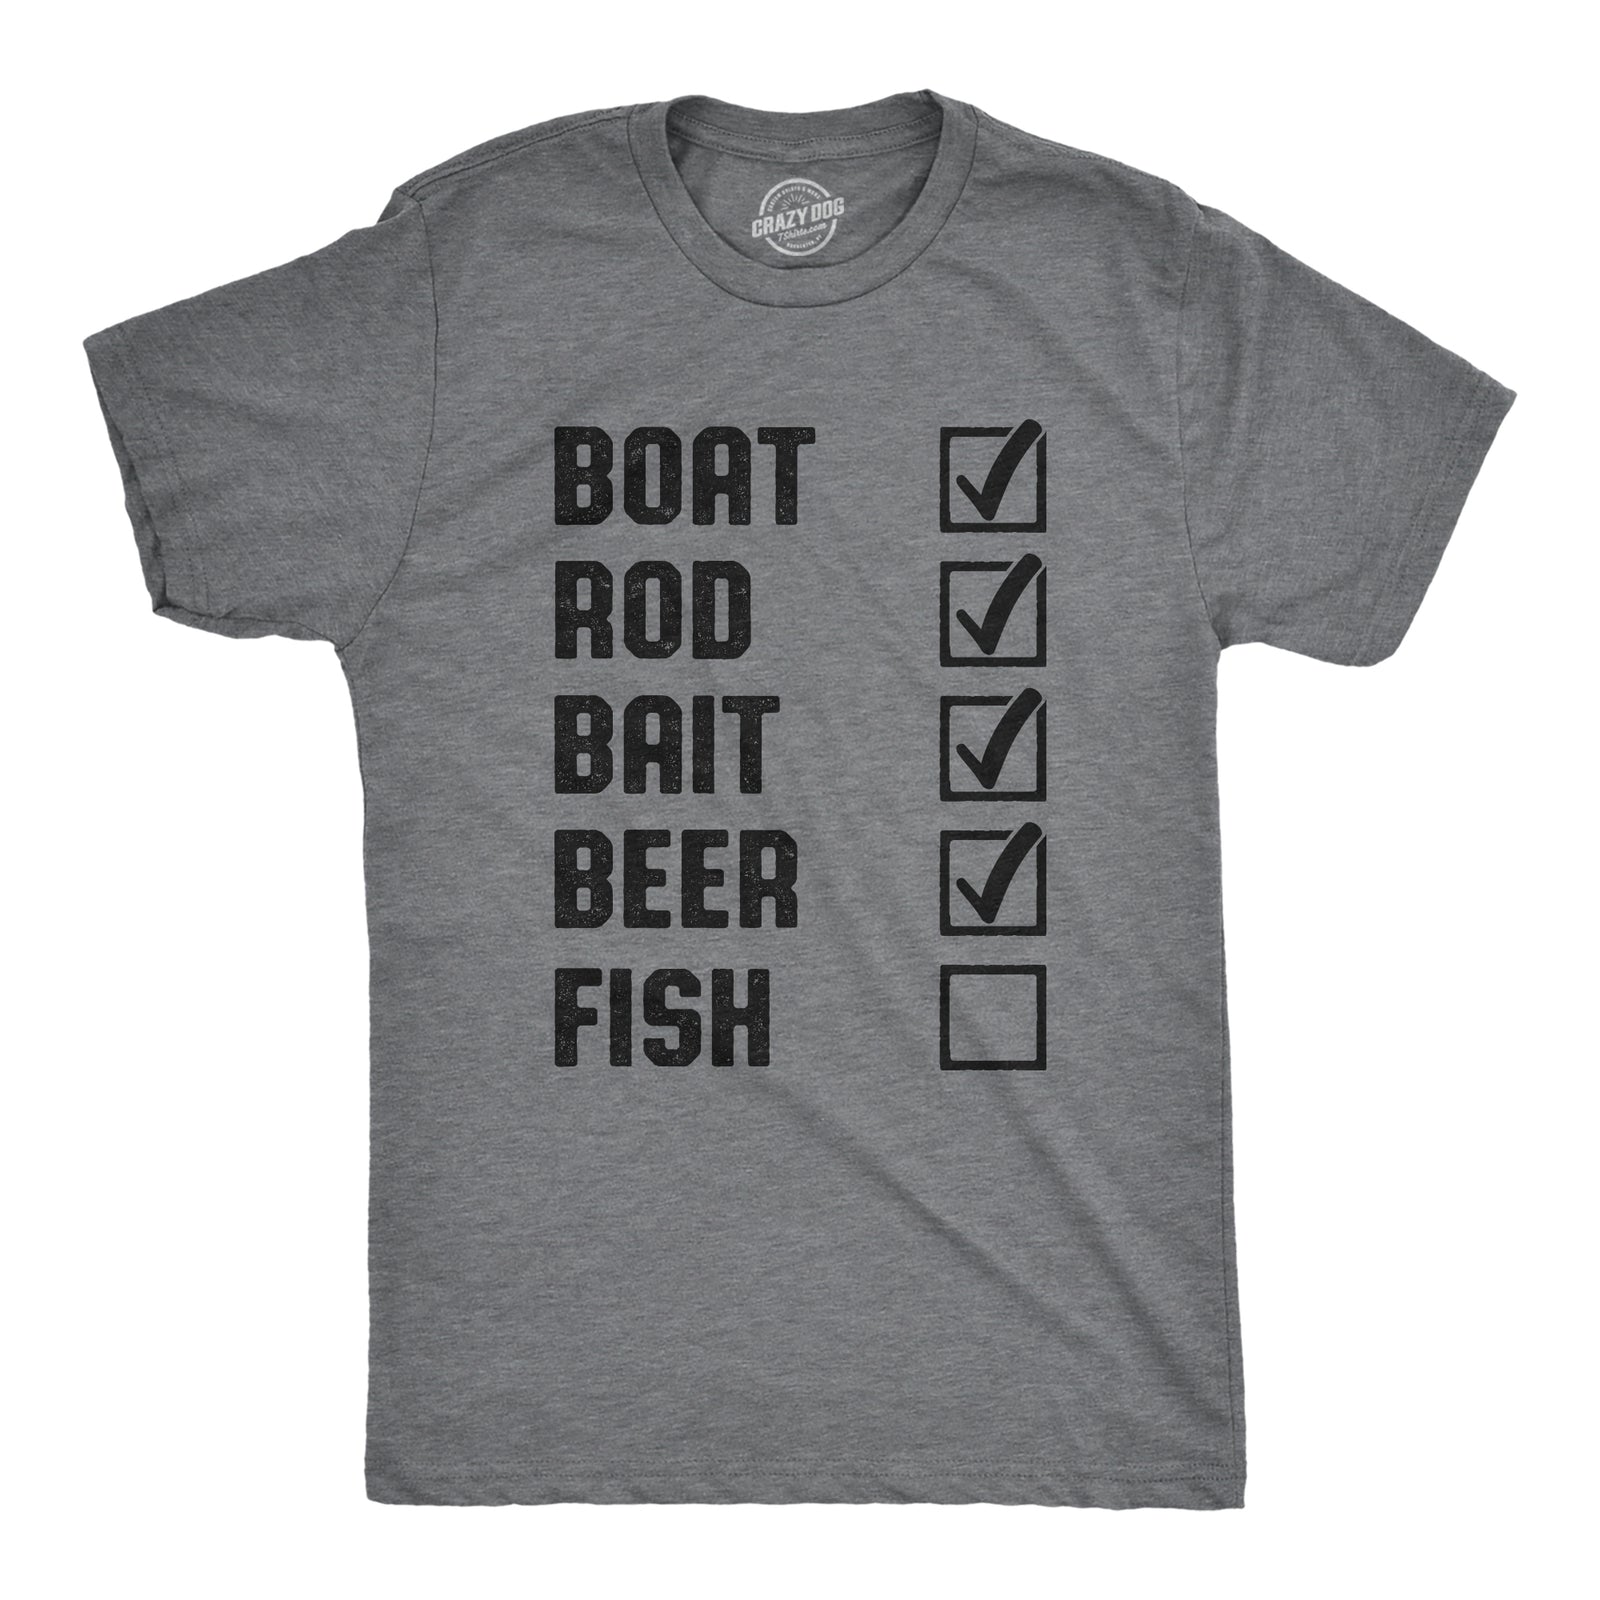 My Retirement Plan Is Fishing Men's T Shirt - Crazy Dog T-Shirts